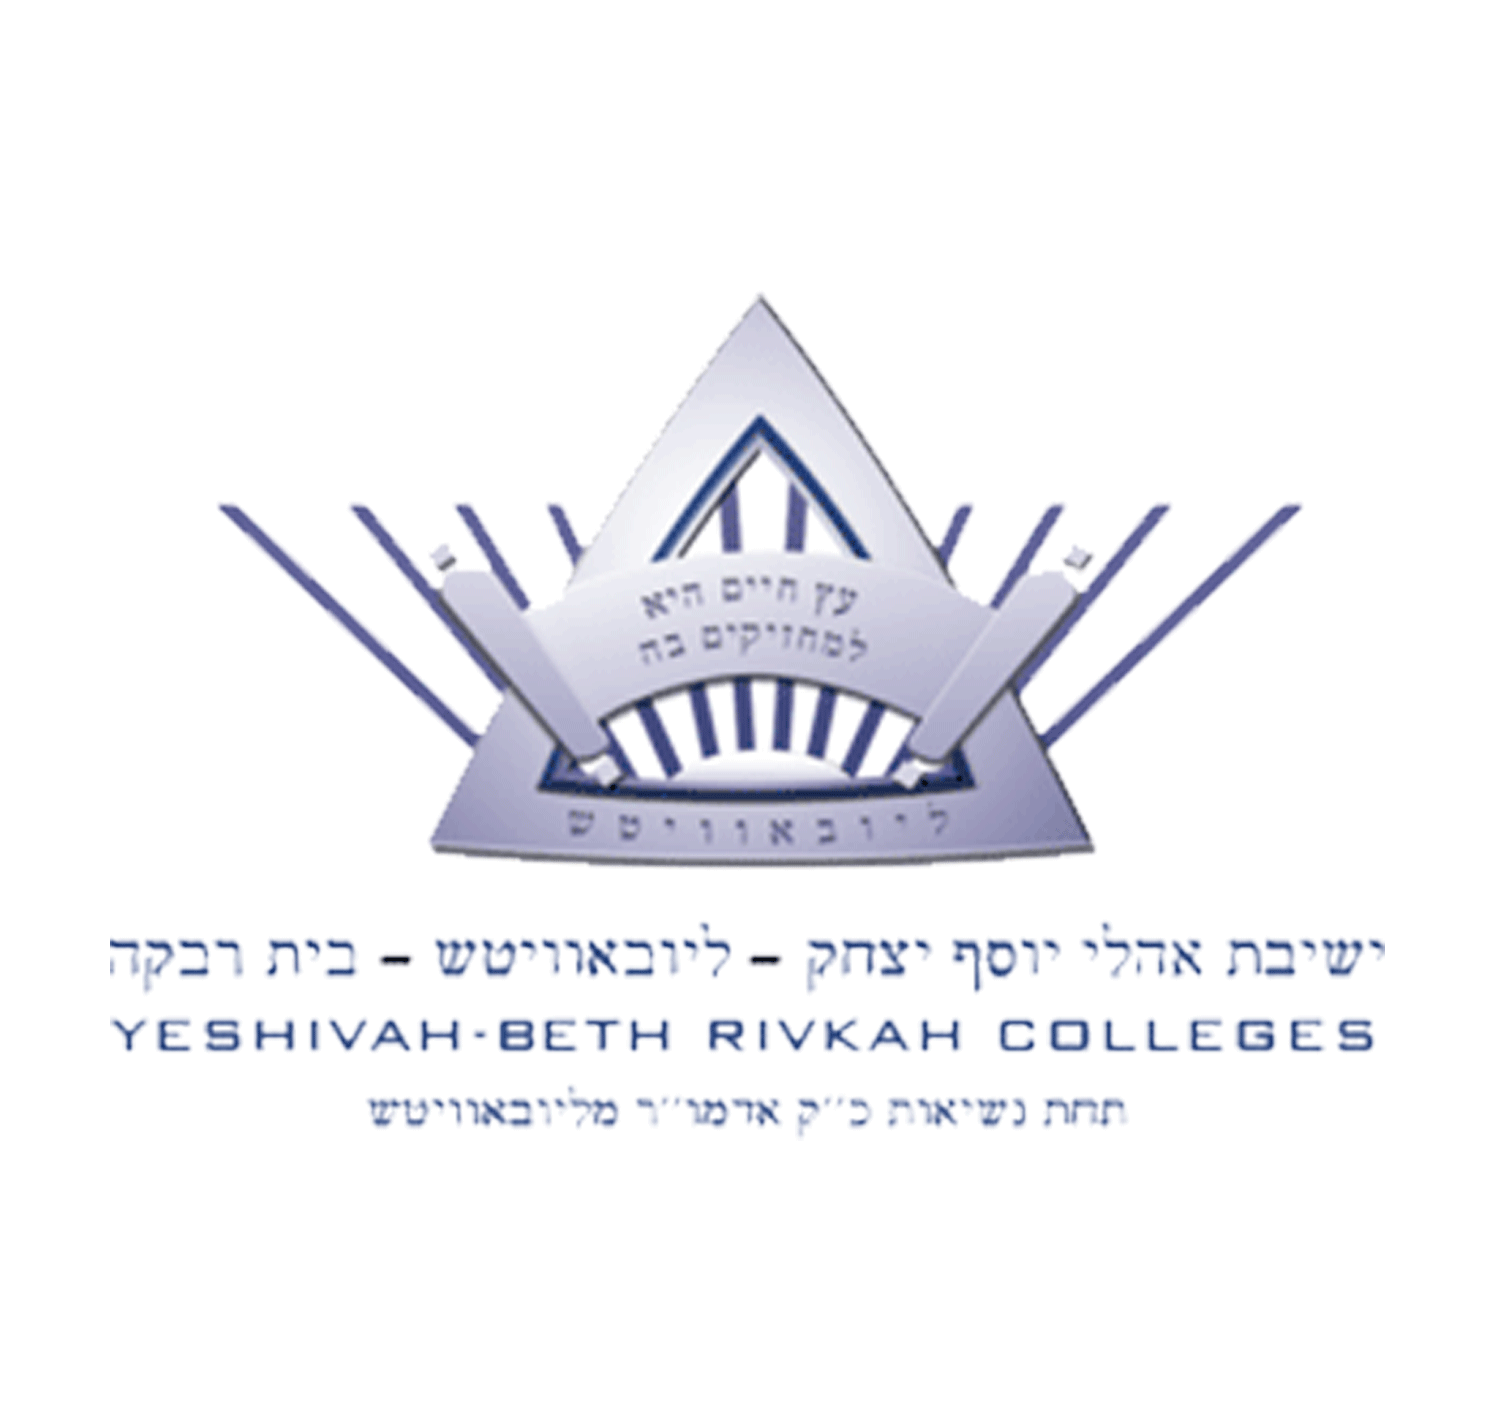 Wholesale Order For Beth Rivkah Ladies College